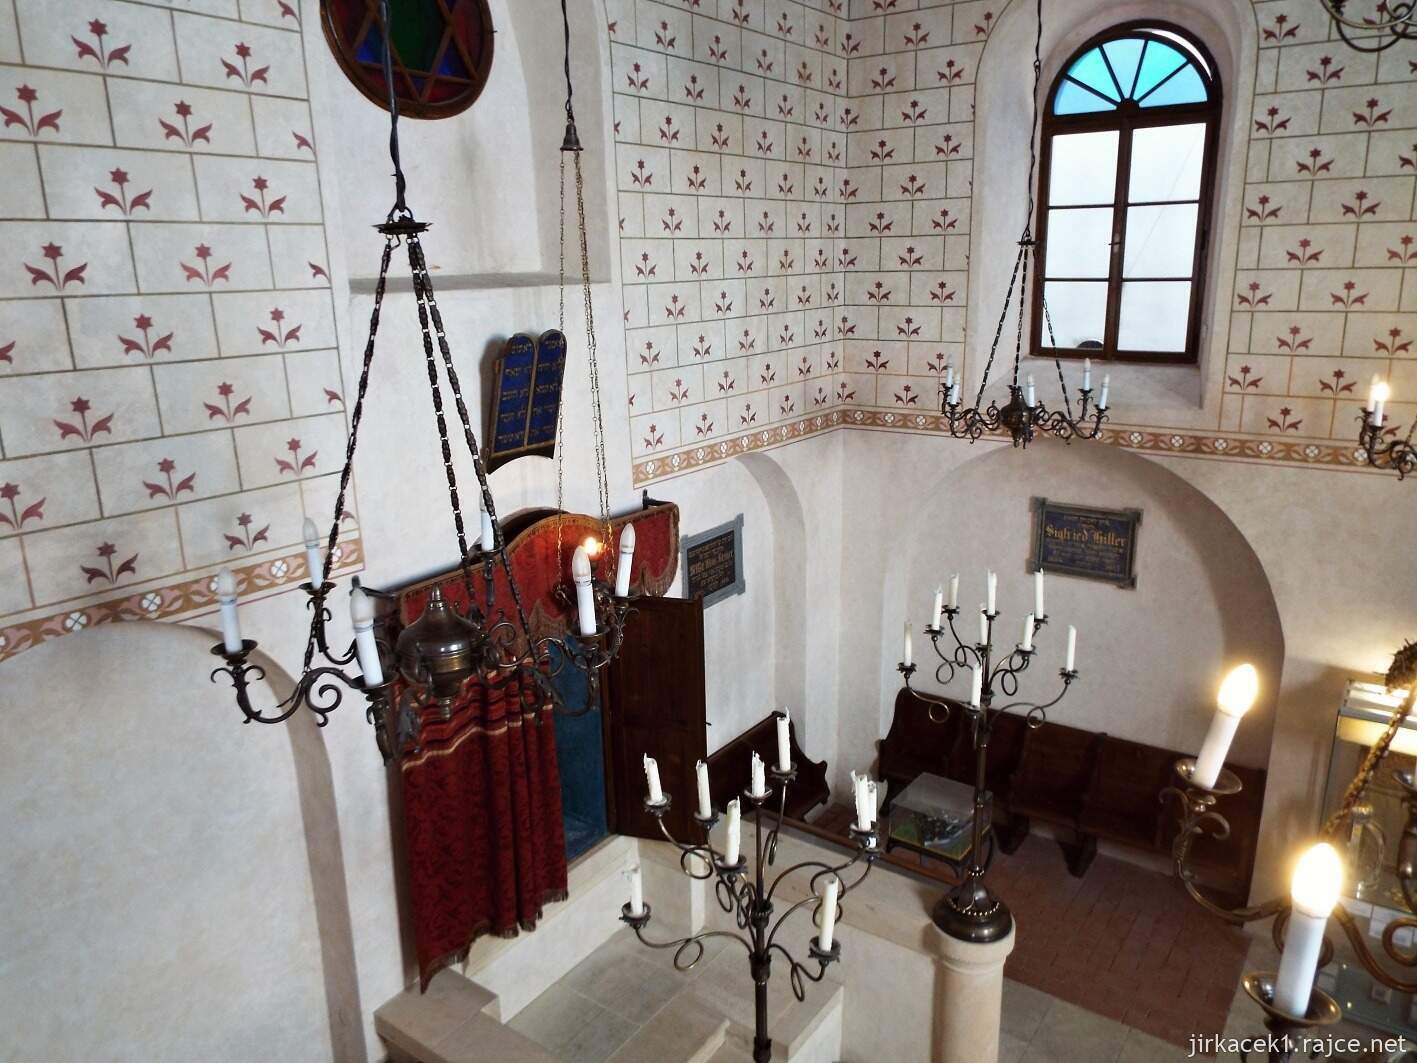 39 - Turnov - Synagoga 12 - interiér